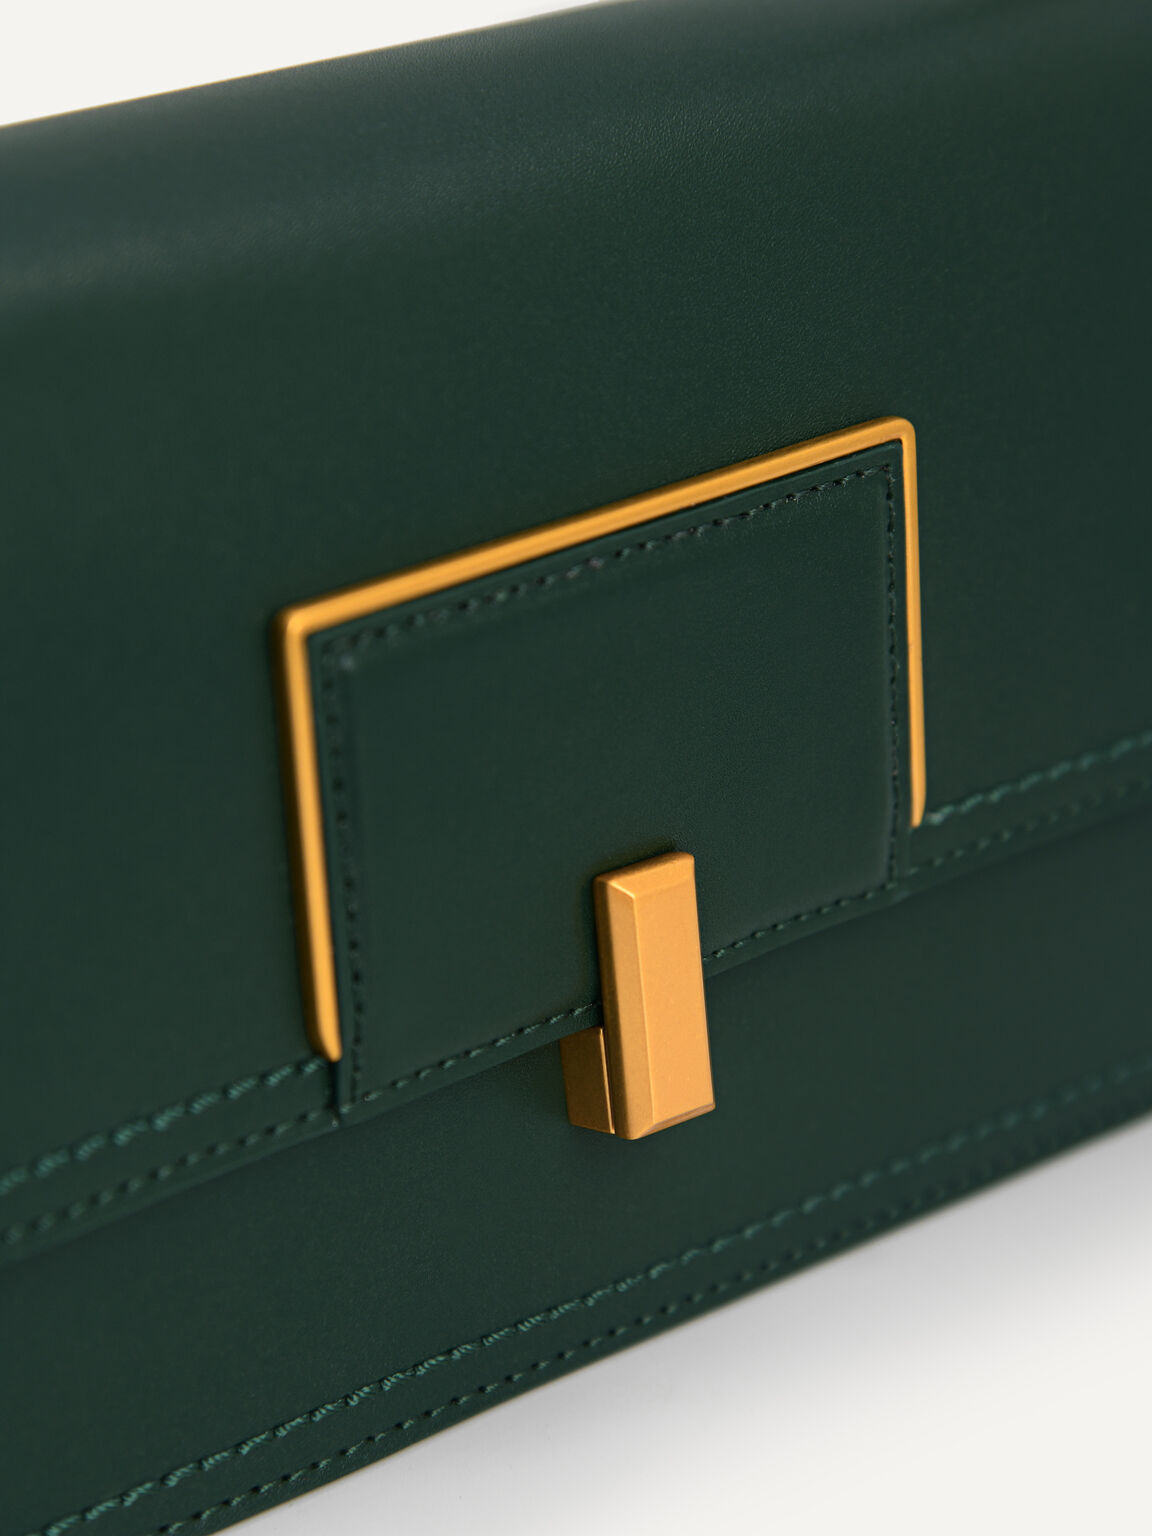 Monochrome Leather Shoulder Bag, Dark Green